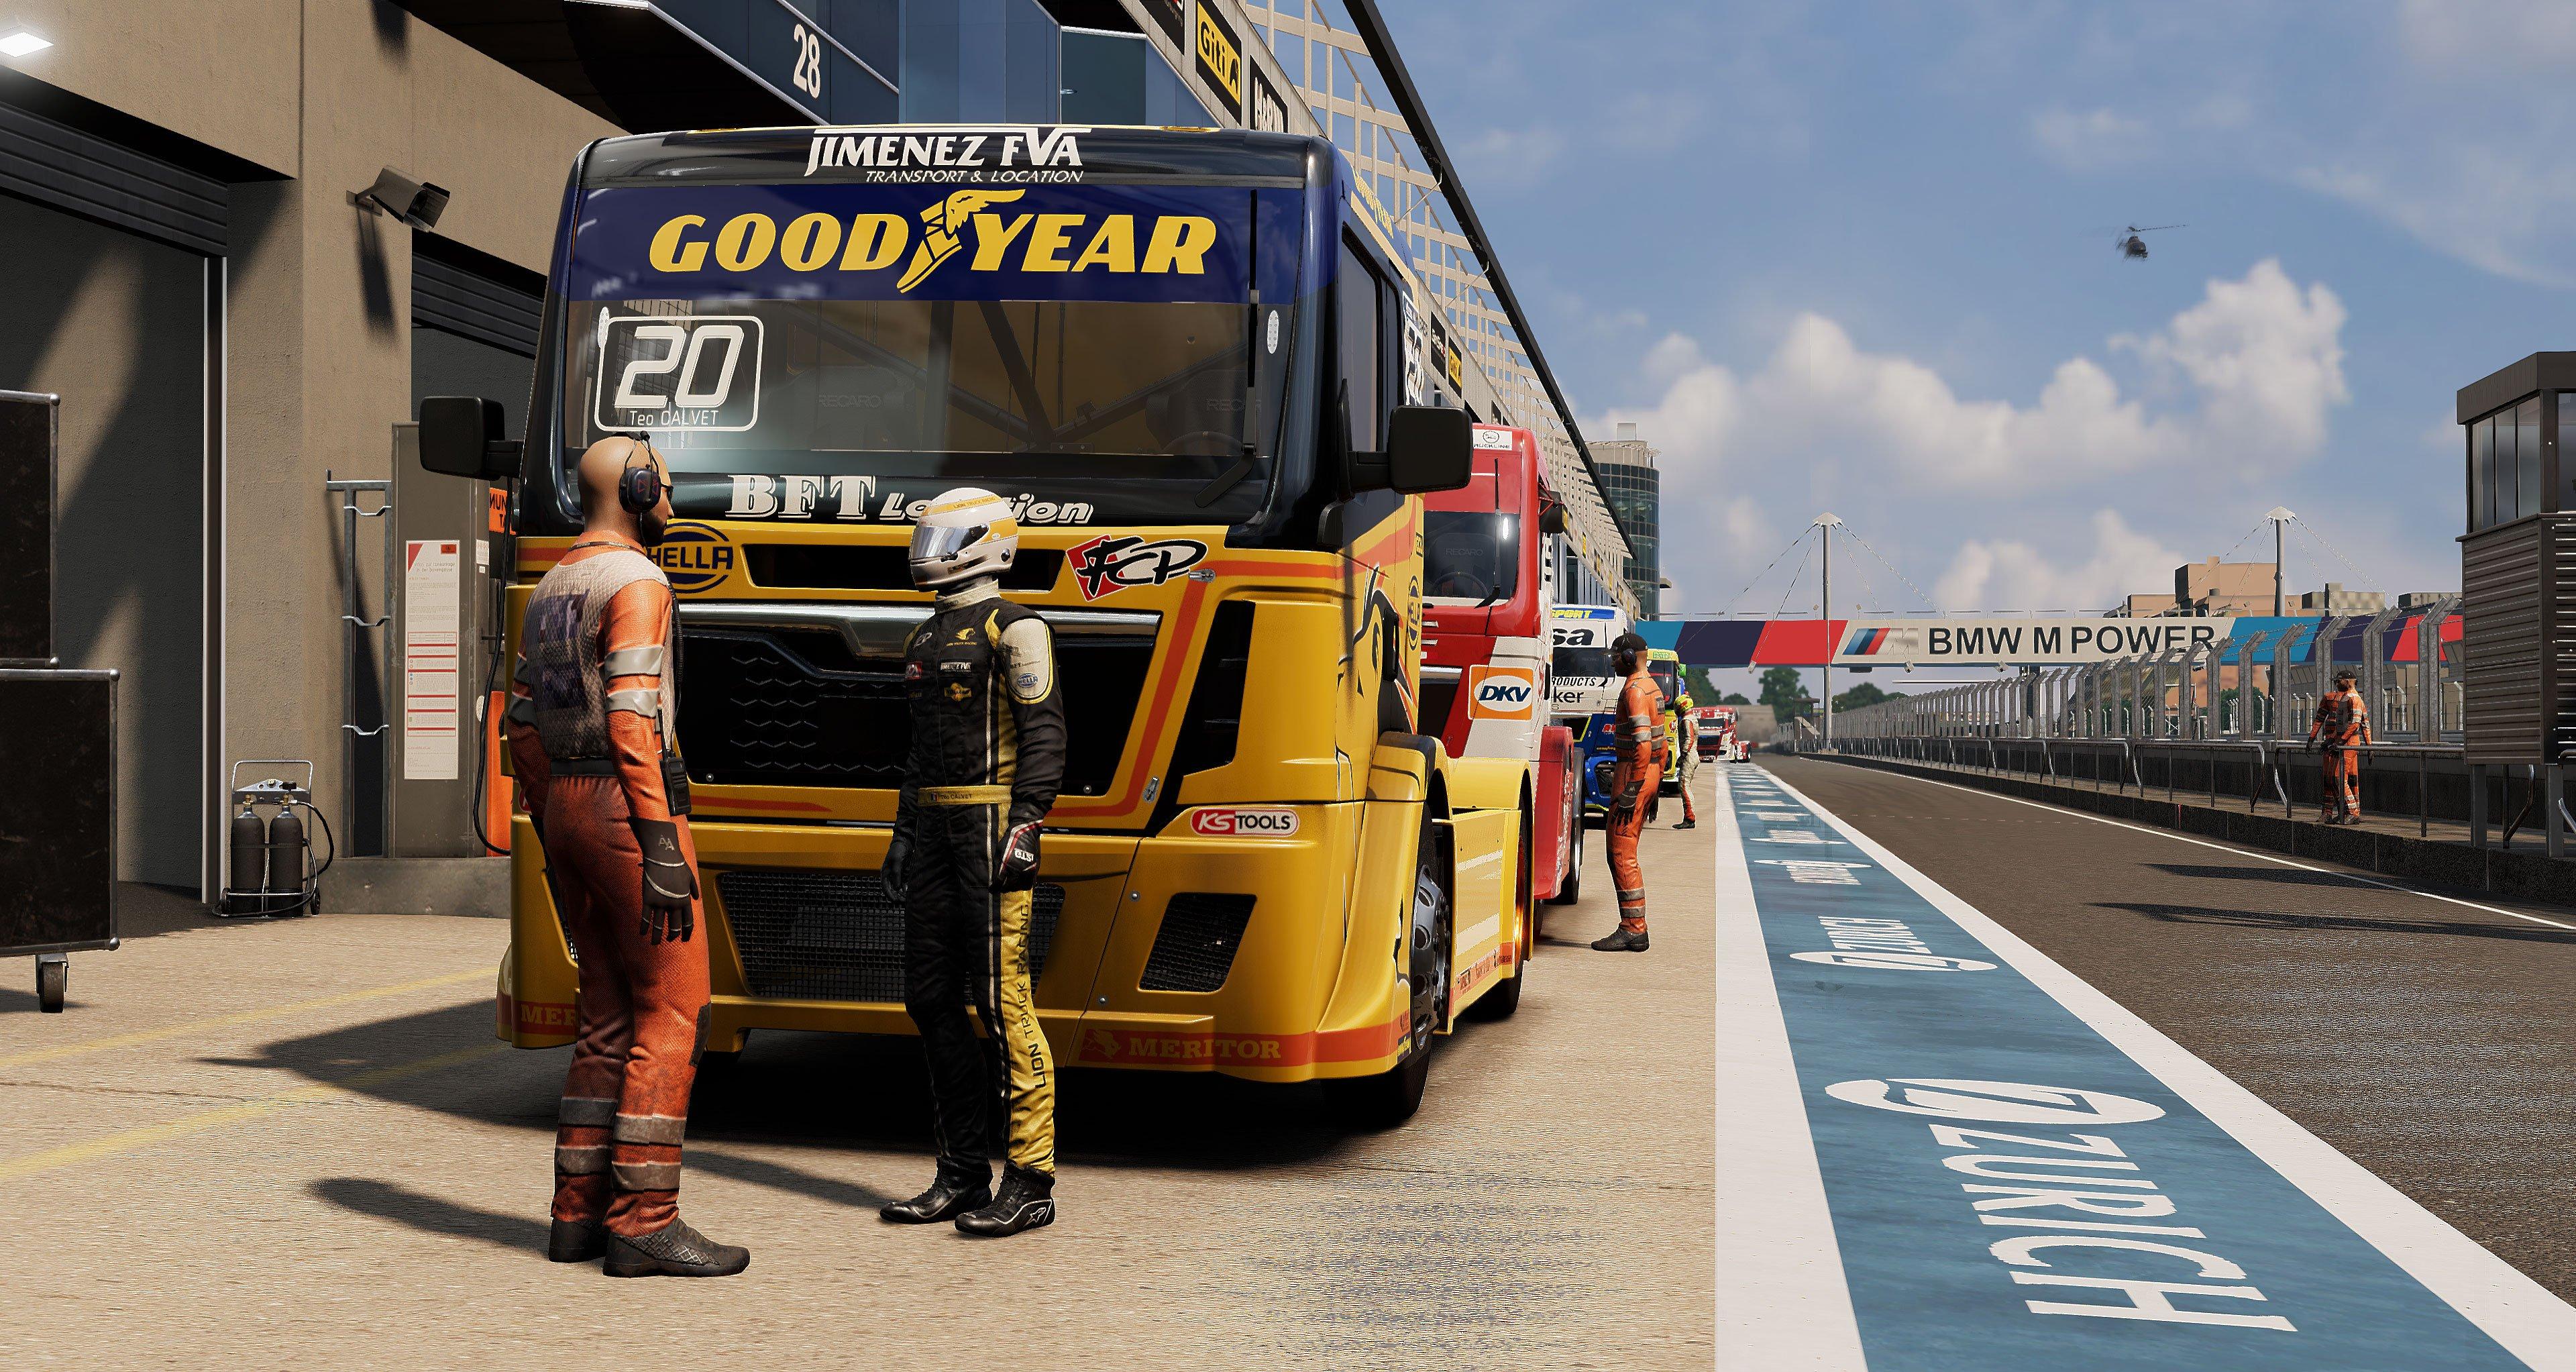 Truck Racing Championship - PS4 - Game Games - Loja de Games